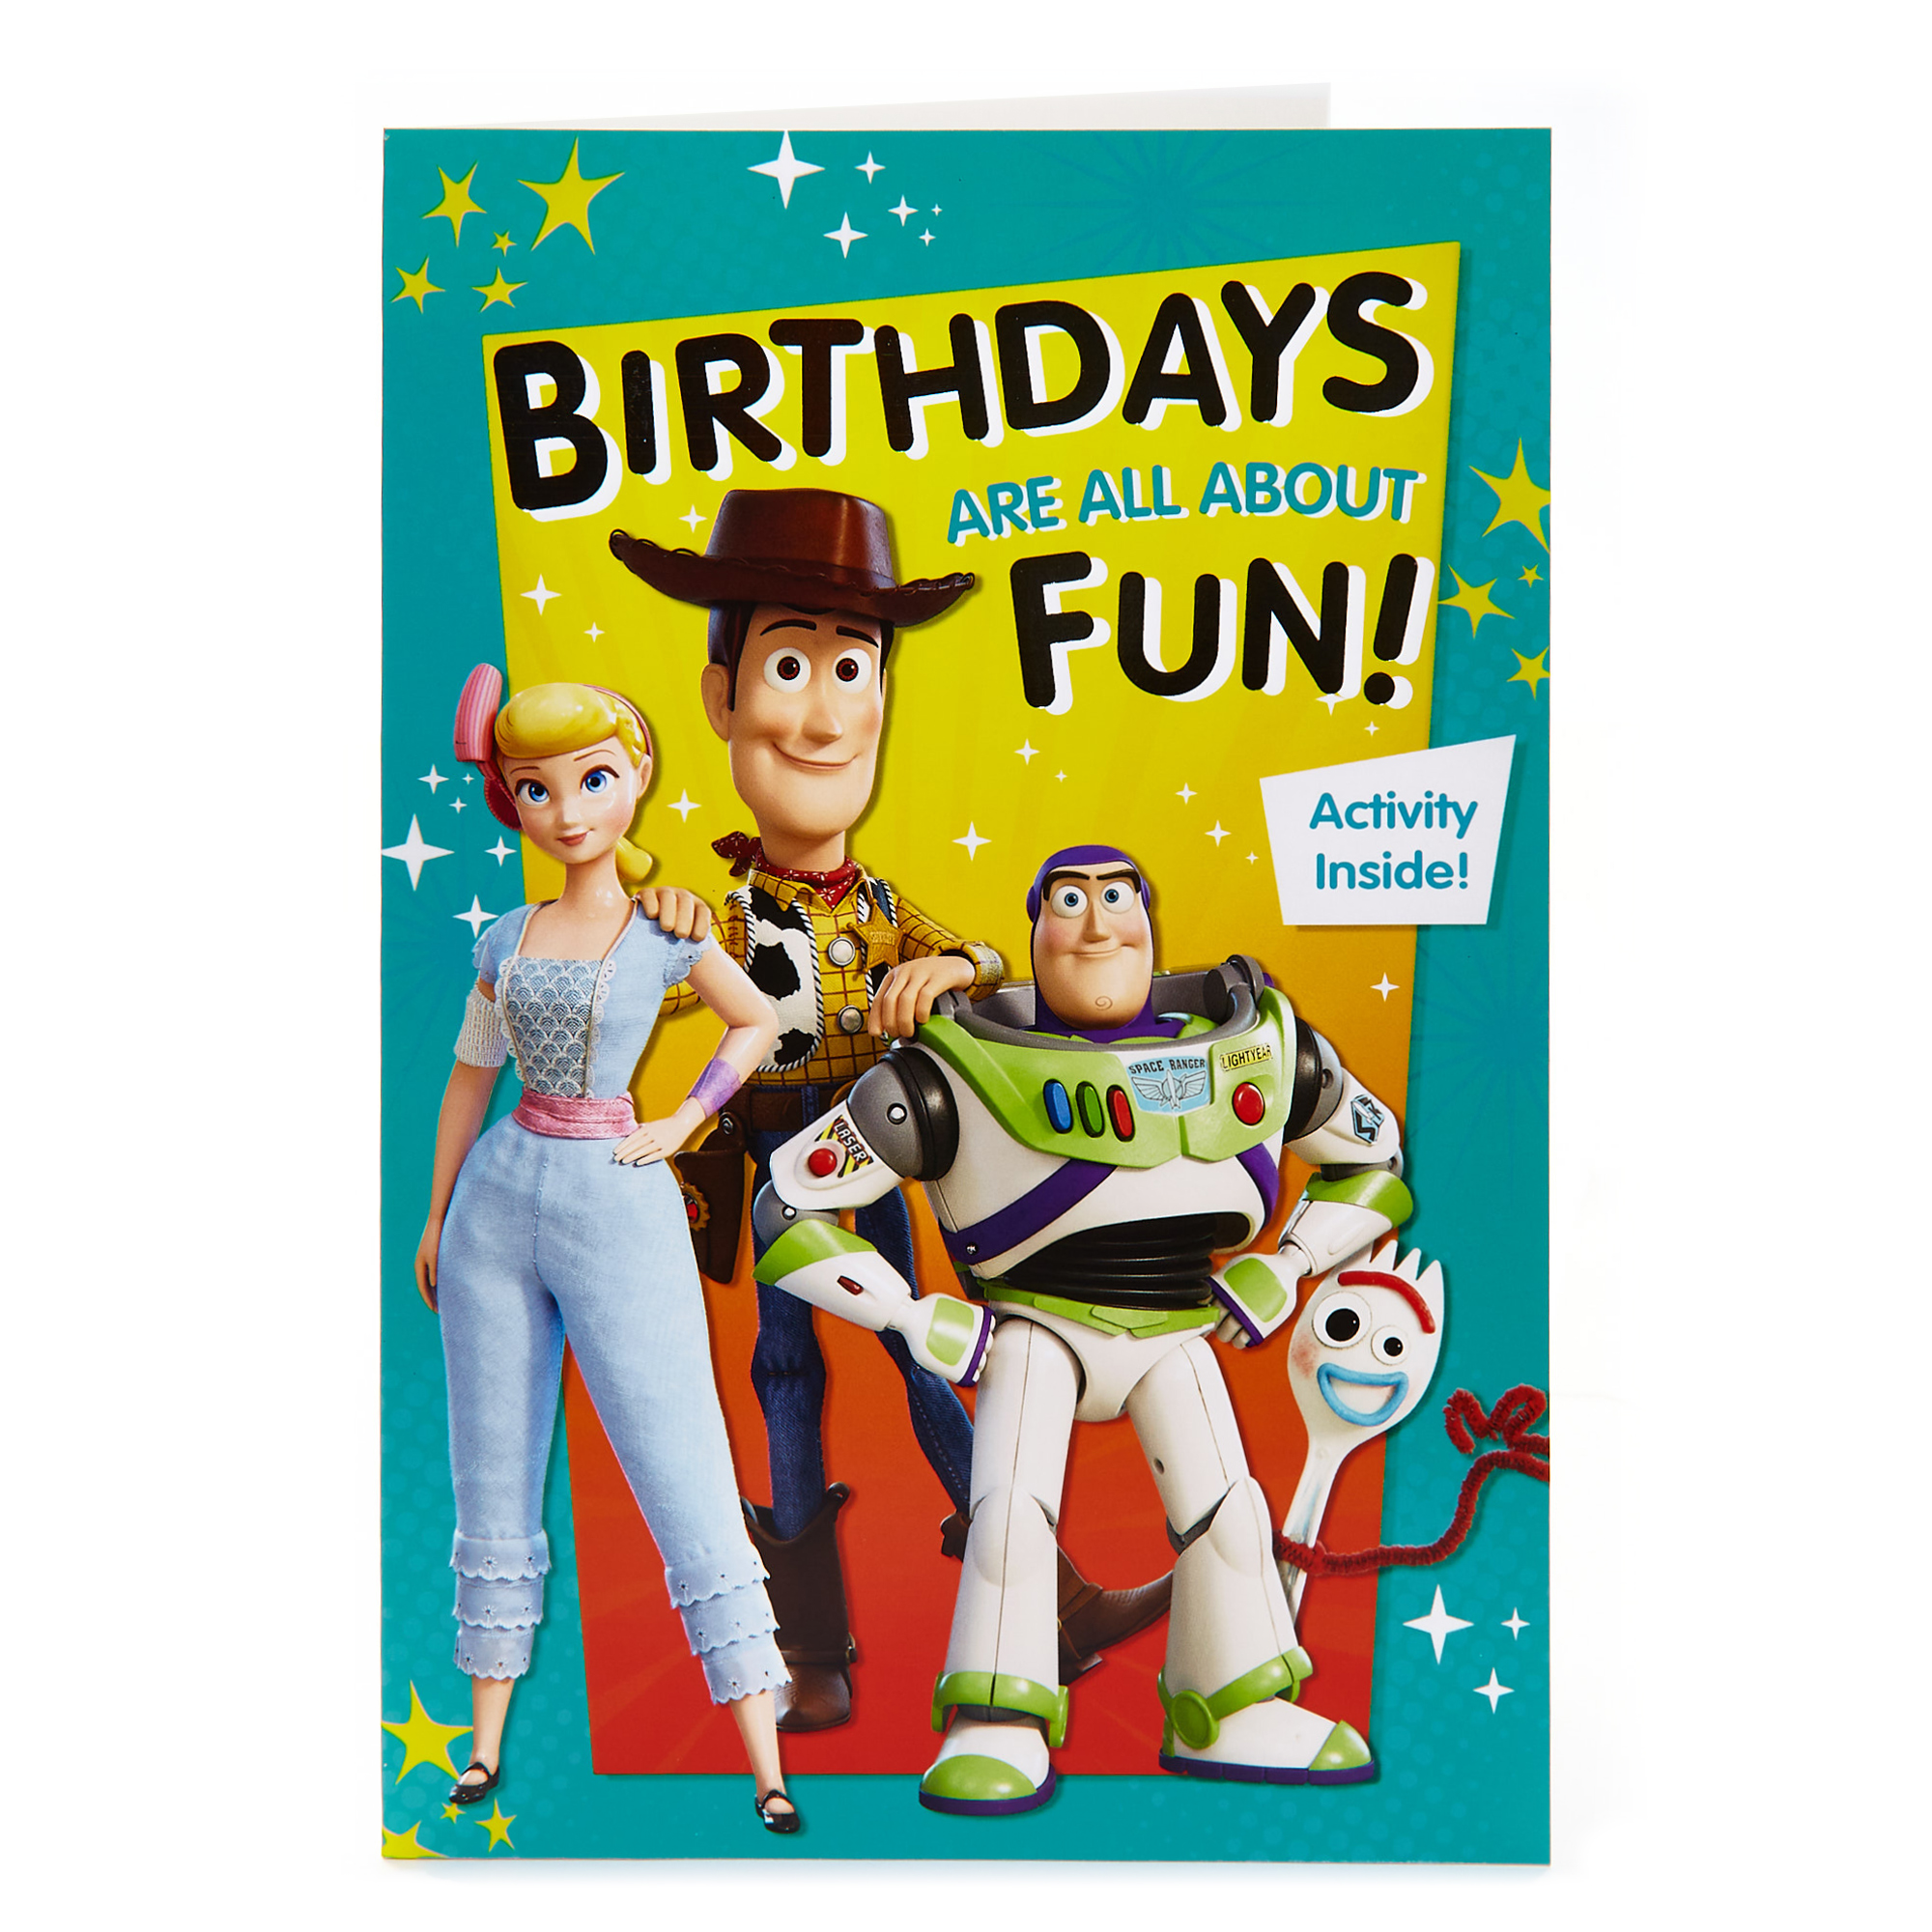 Toy Story 4 Birthday Card - Activity Inside